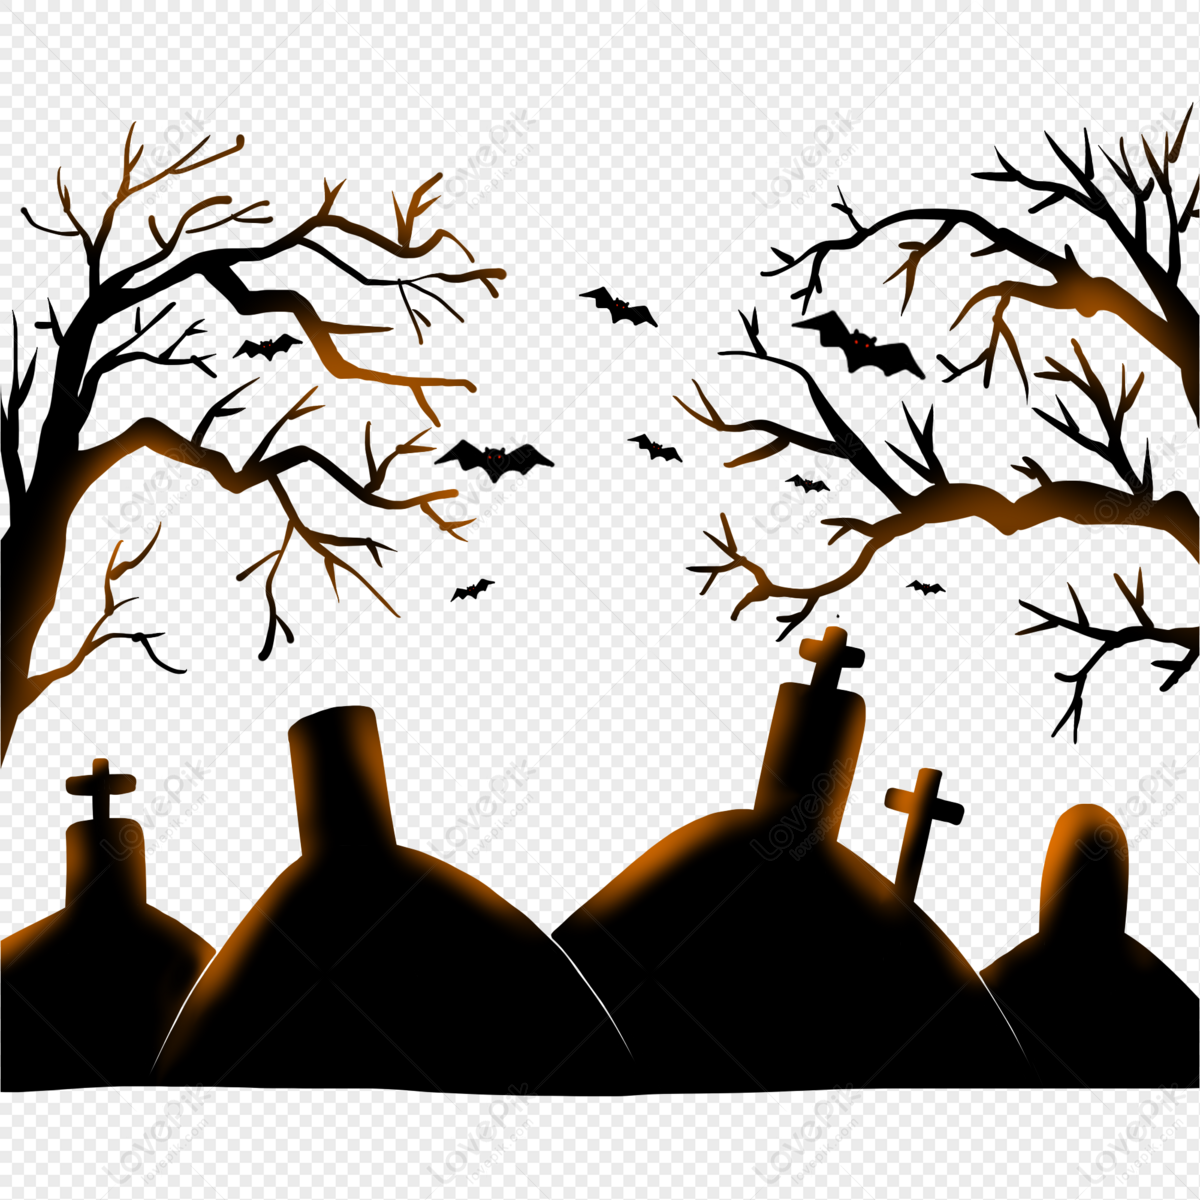 Halloween graveyard dead tree silhouette, tree, horror, dead tree png white transparent